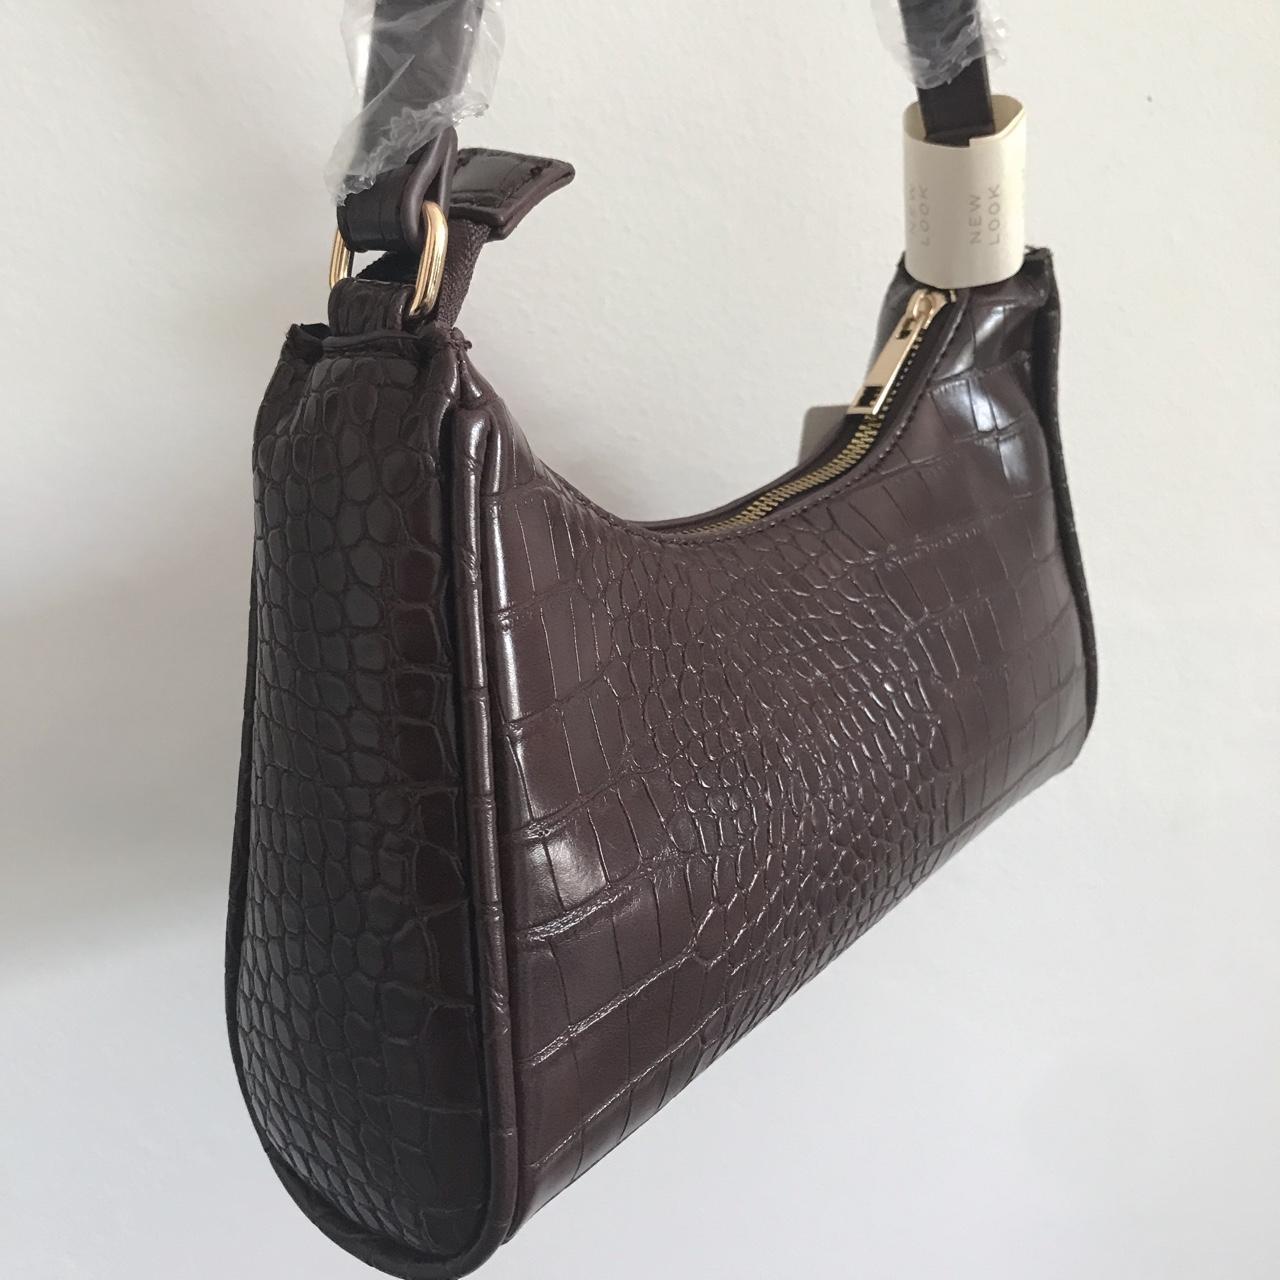 Buy Sufiyan Fashion Women's PU Leather New look sling Handbag/Shoulder bags  (Black) at Amazon.in